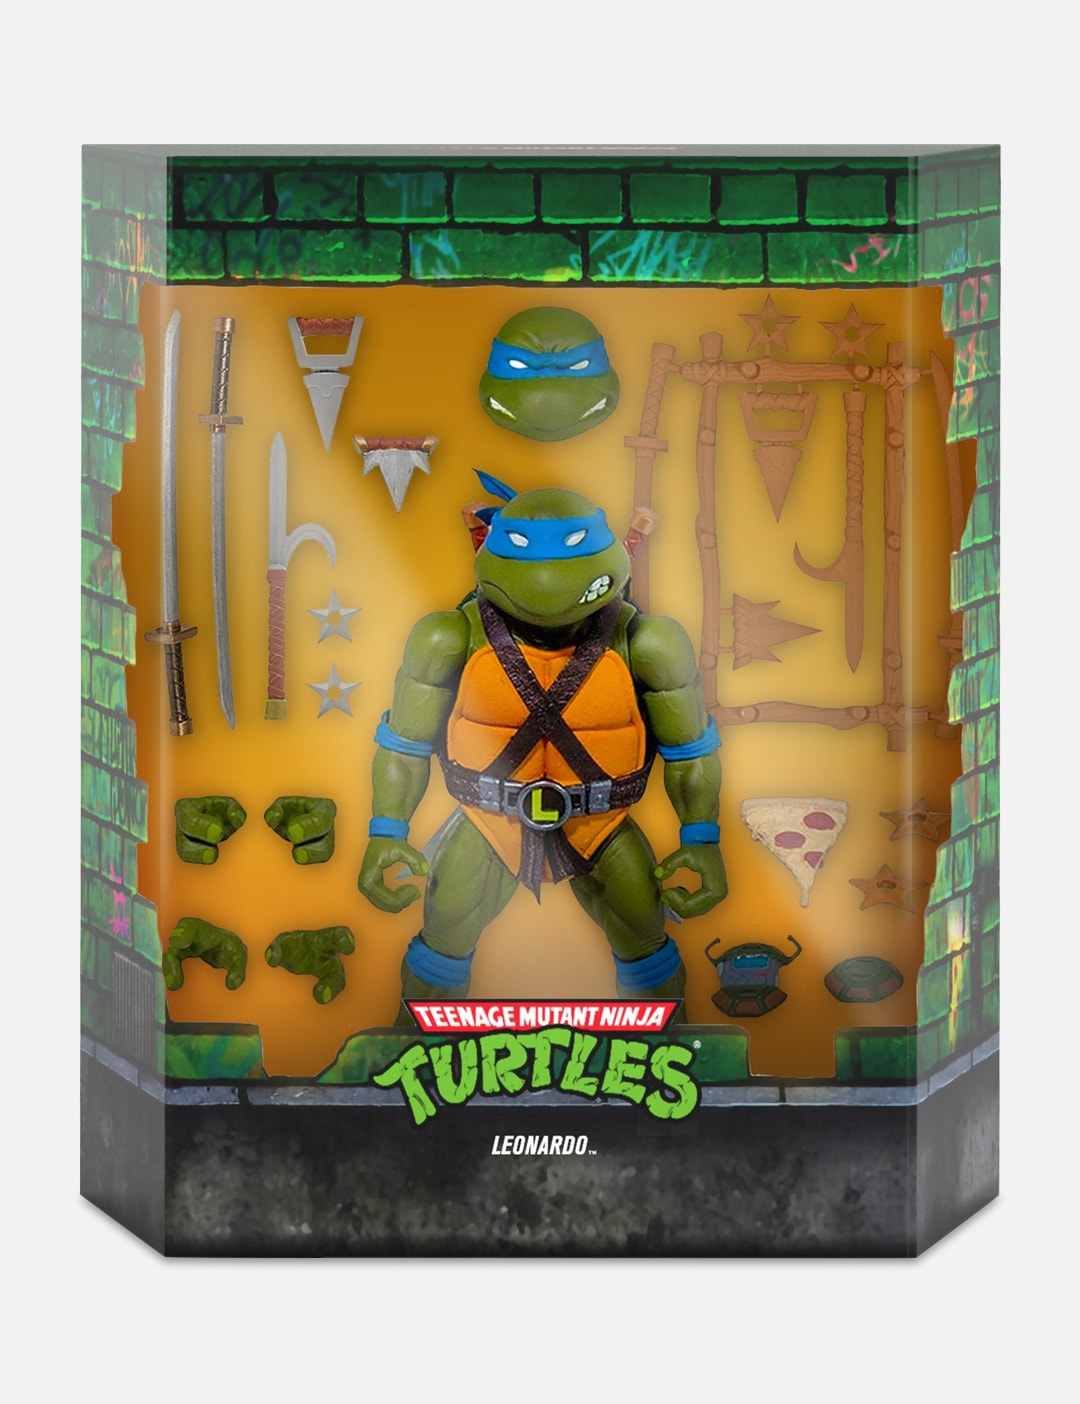 Teenage Mutant Ninja Turtles Boys Turtle Rebels Black Short